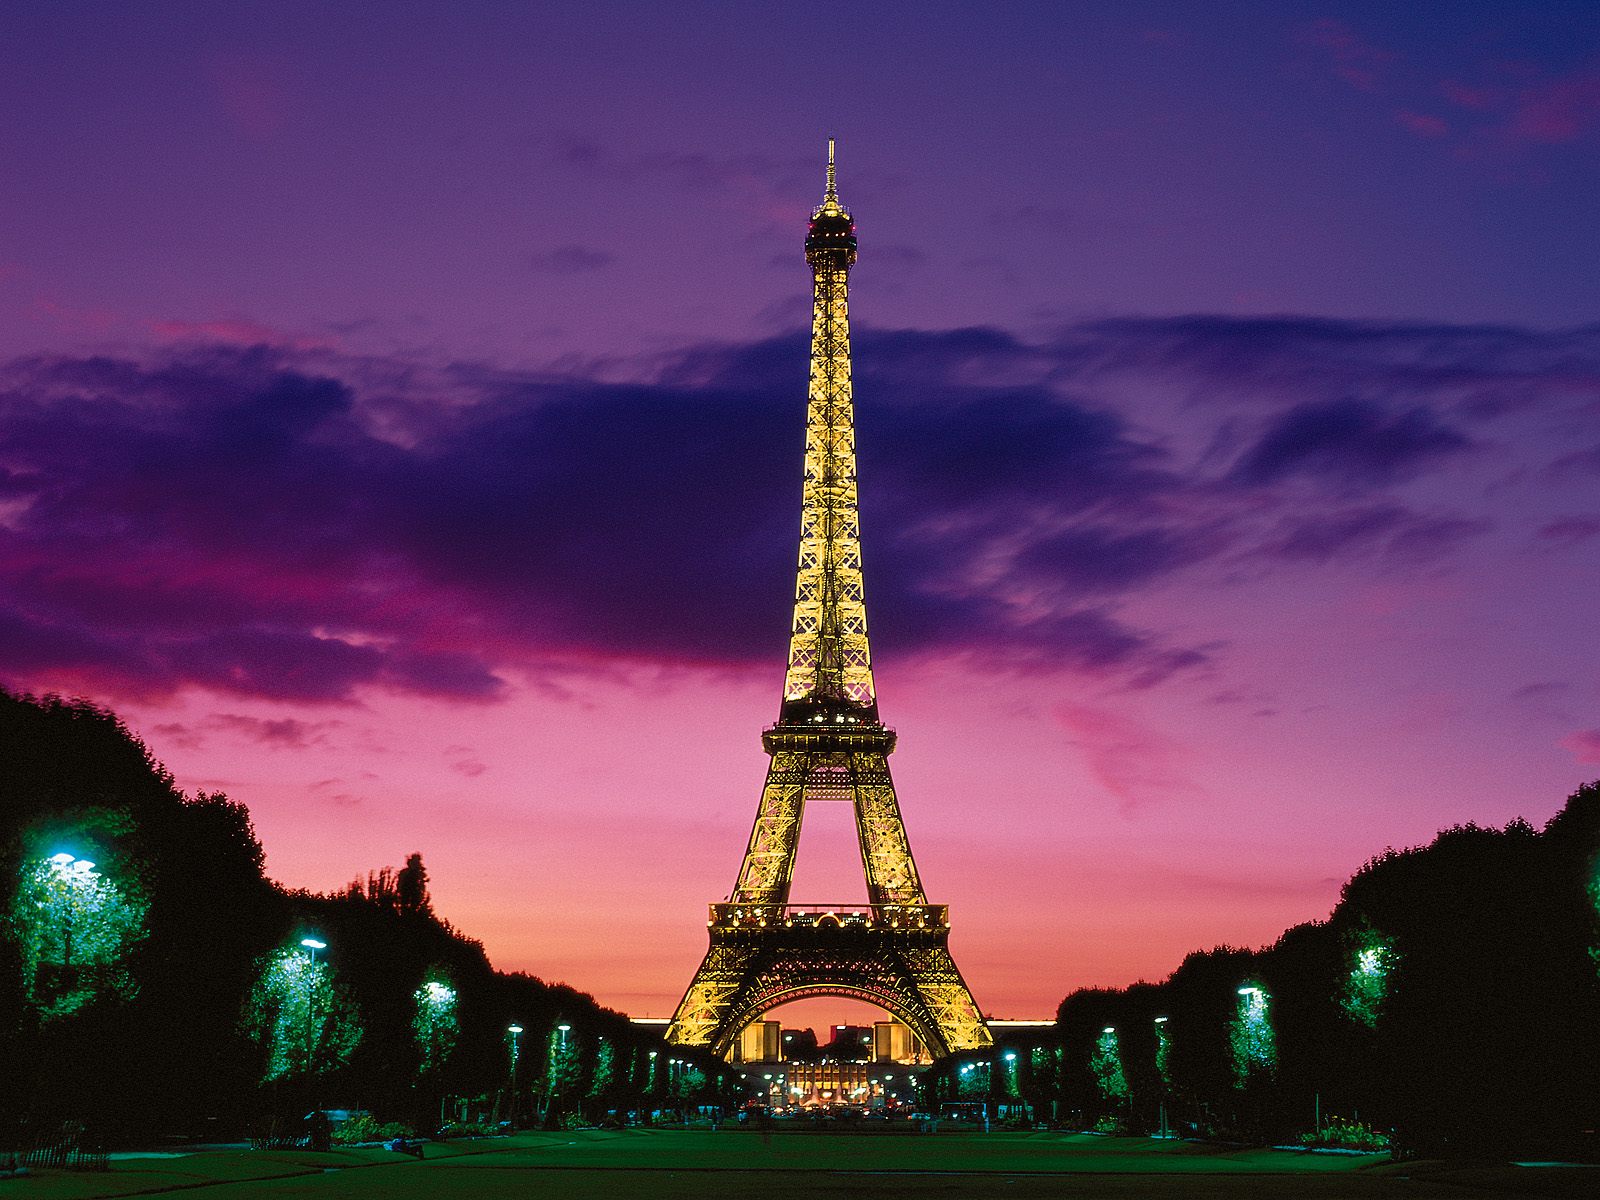 Paris: Paris Eiffel Tower at Night